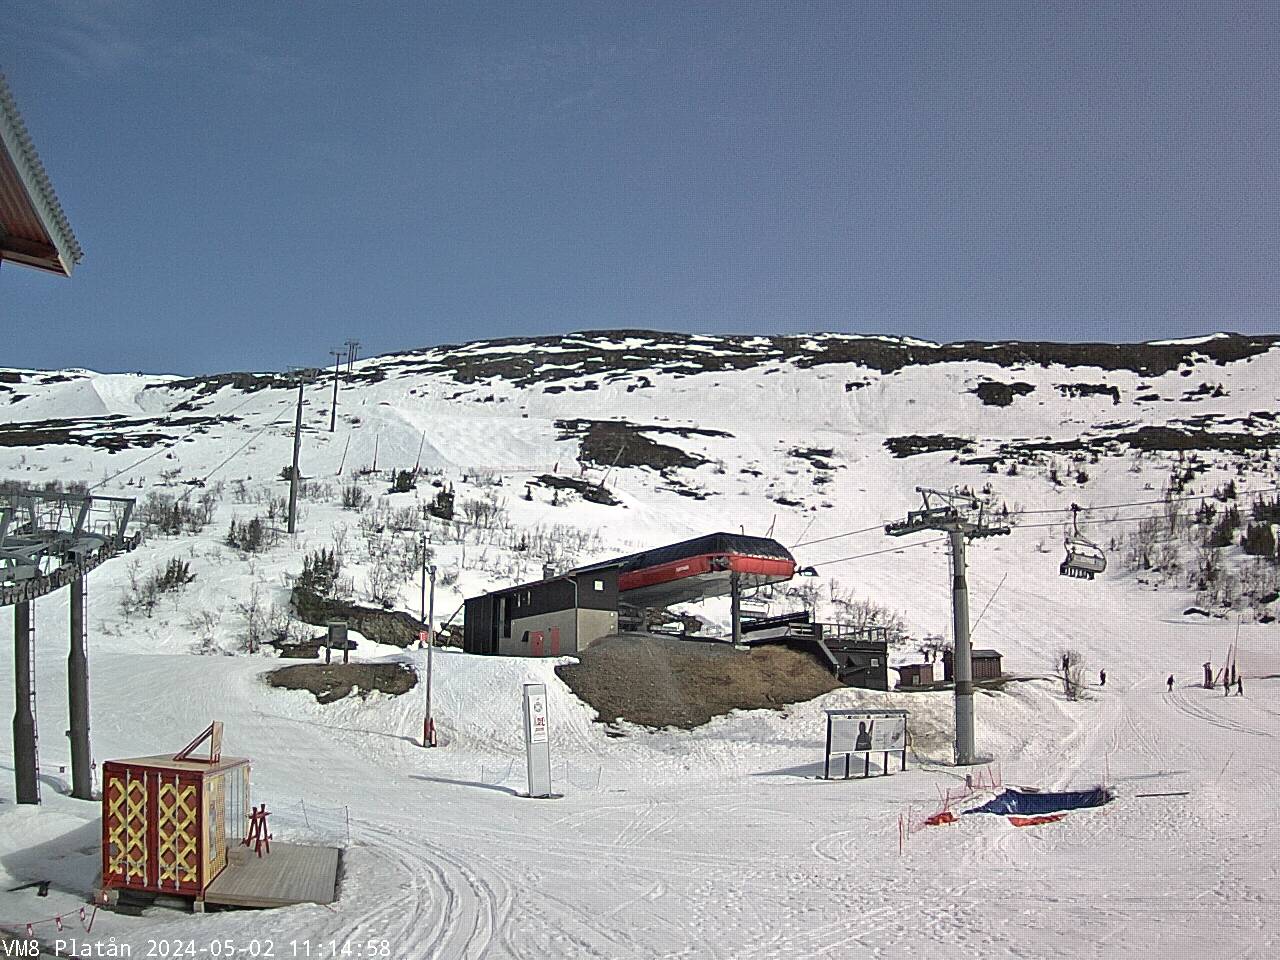 Åre webcam - VM Platan ski station